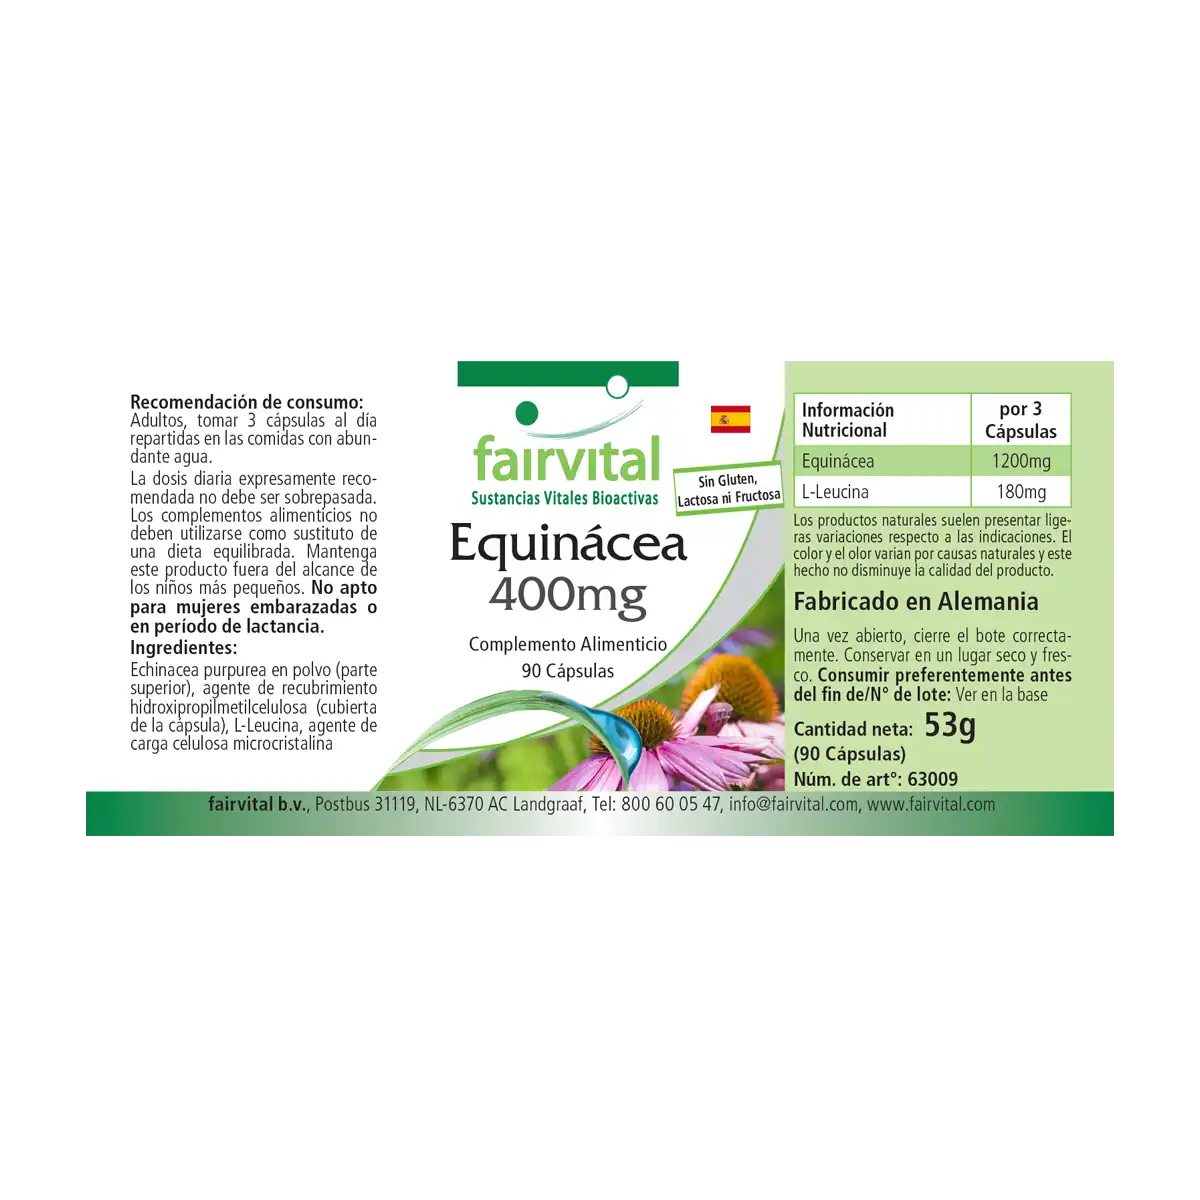 Echinacea 400 mg - 90 gélules